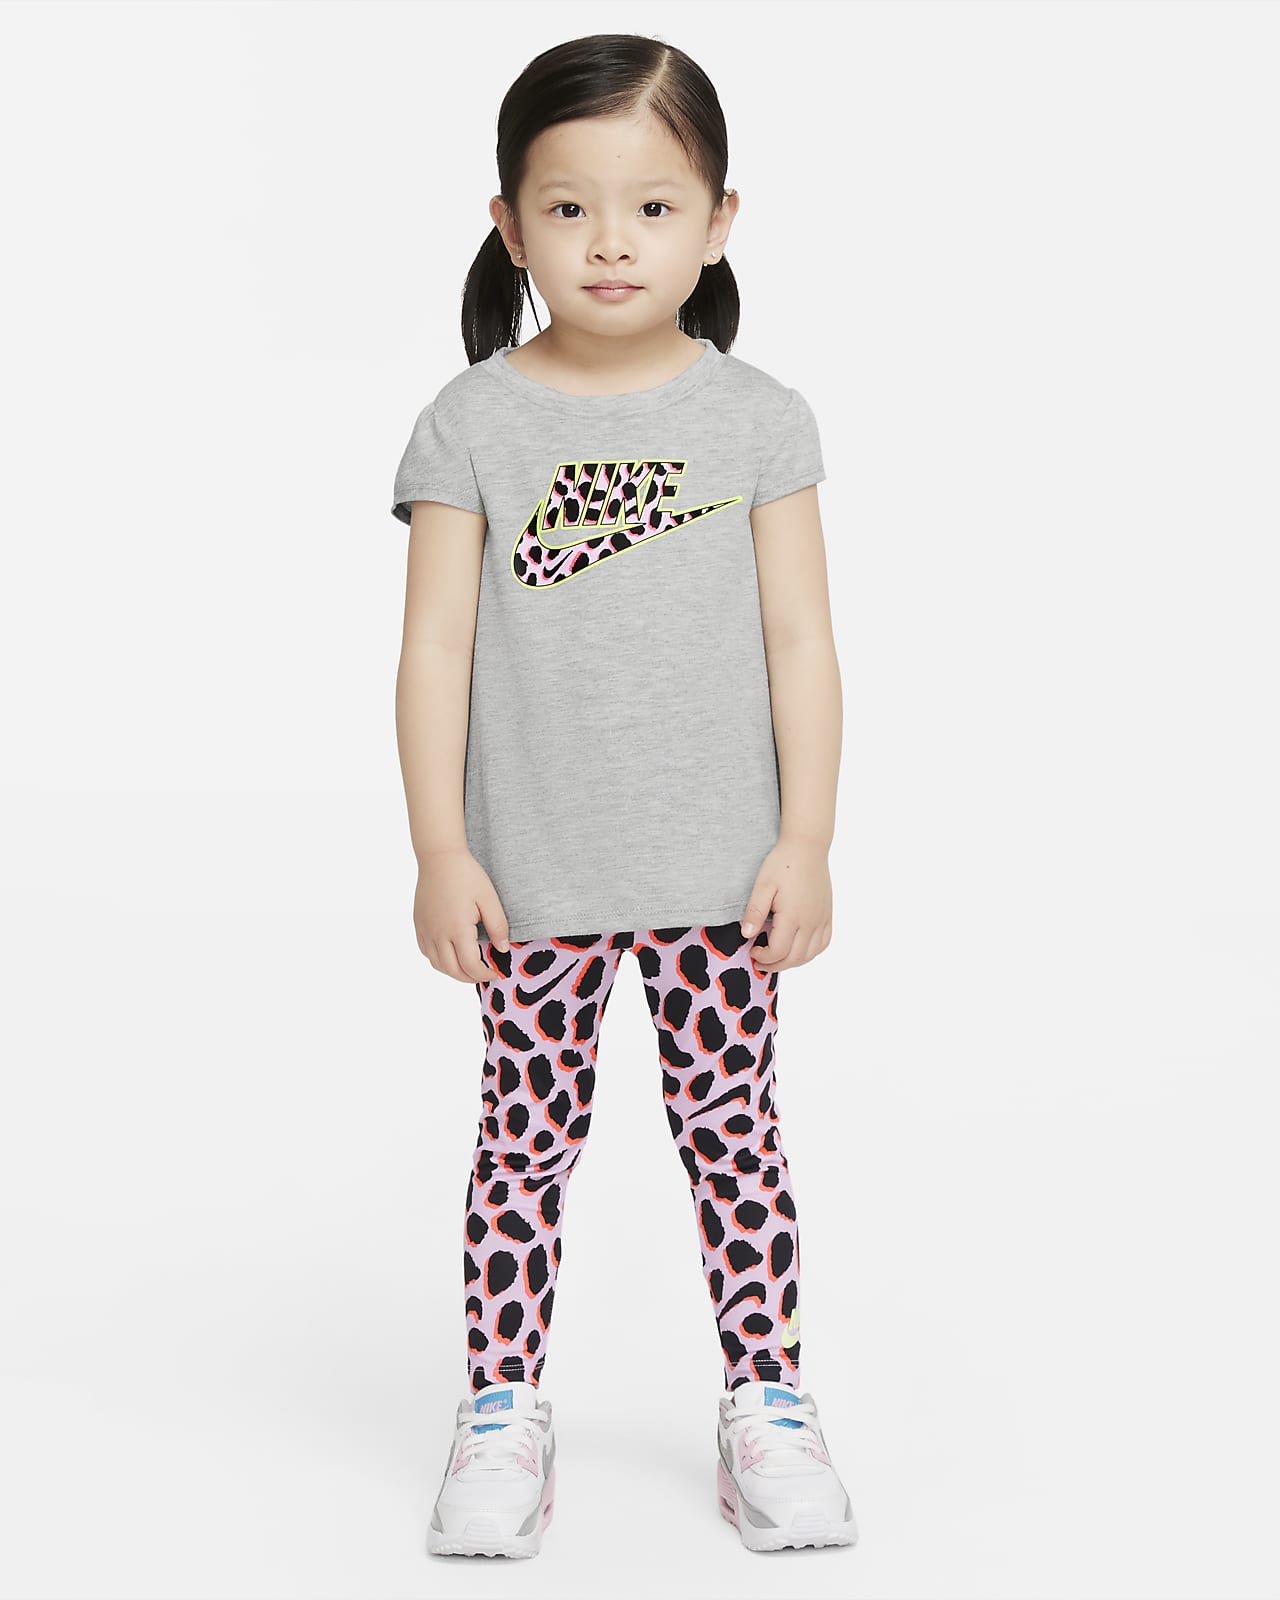 Nike Conjunt de samarreta i leggings - Infant